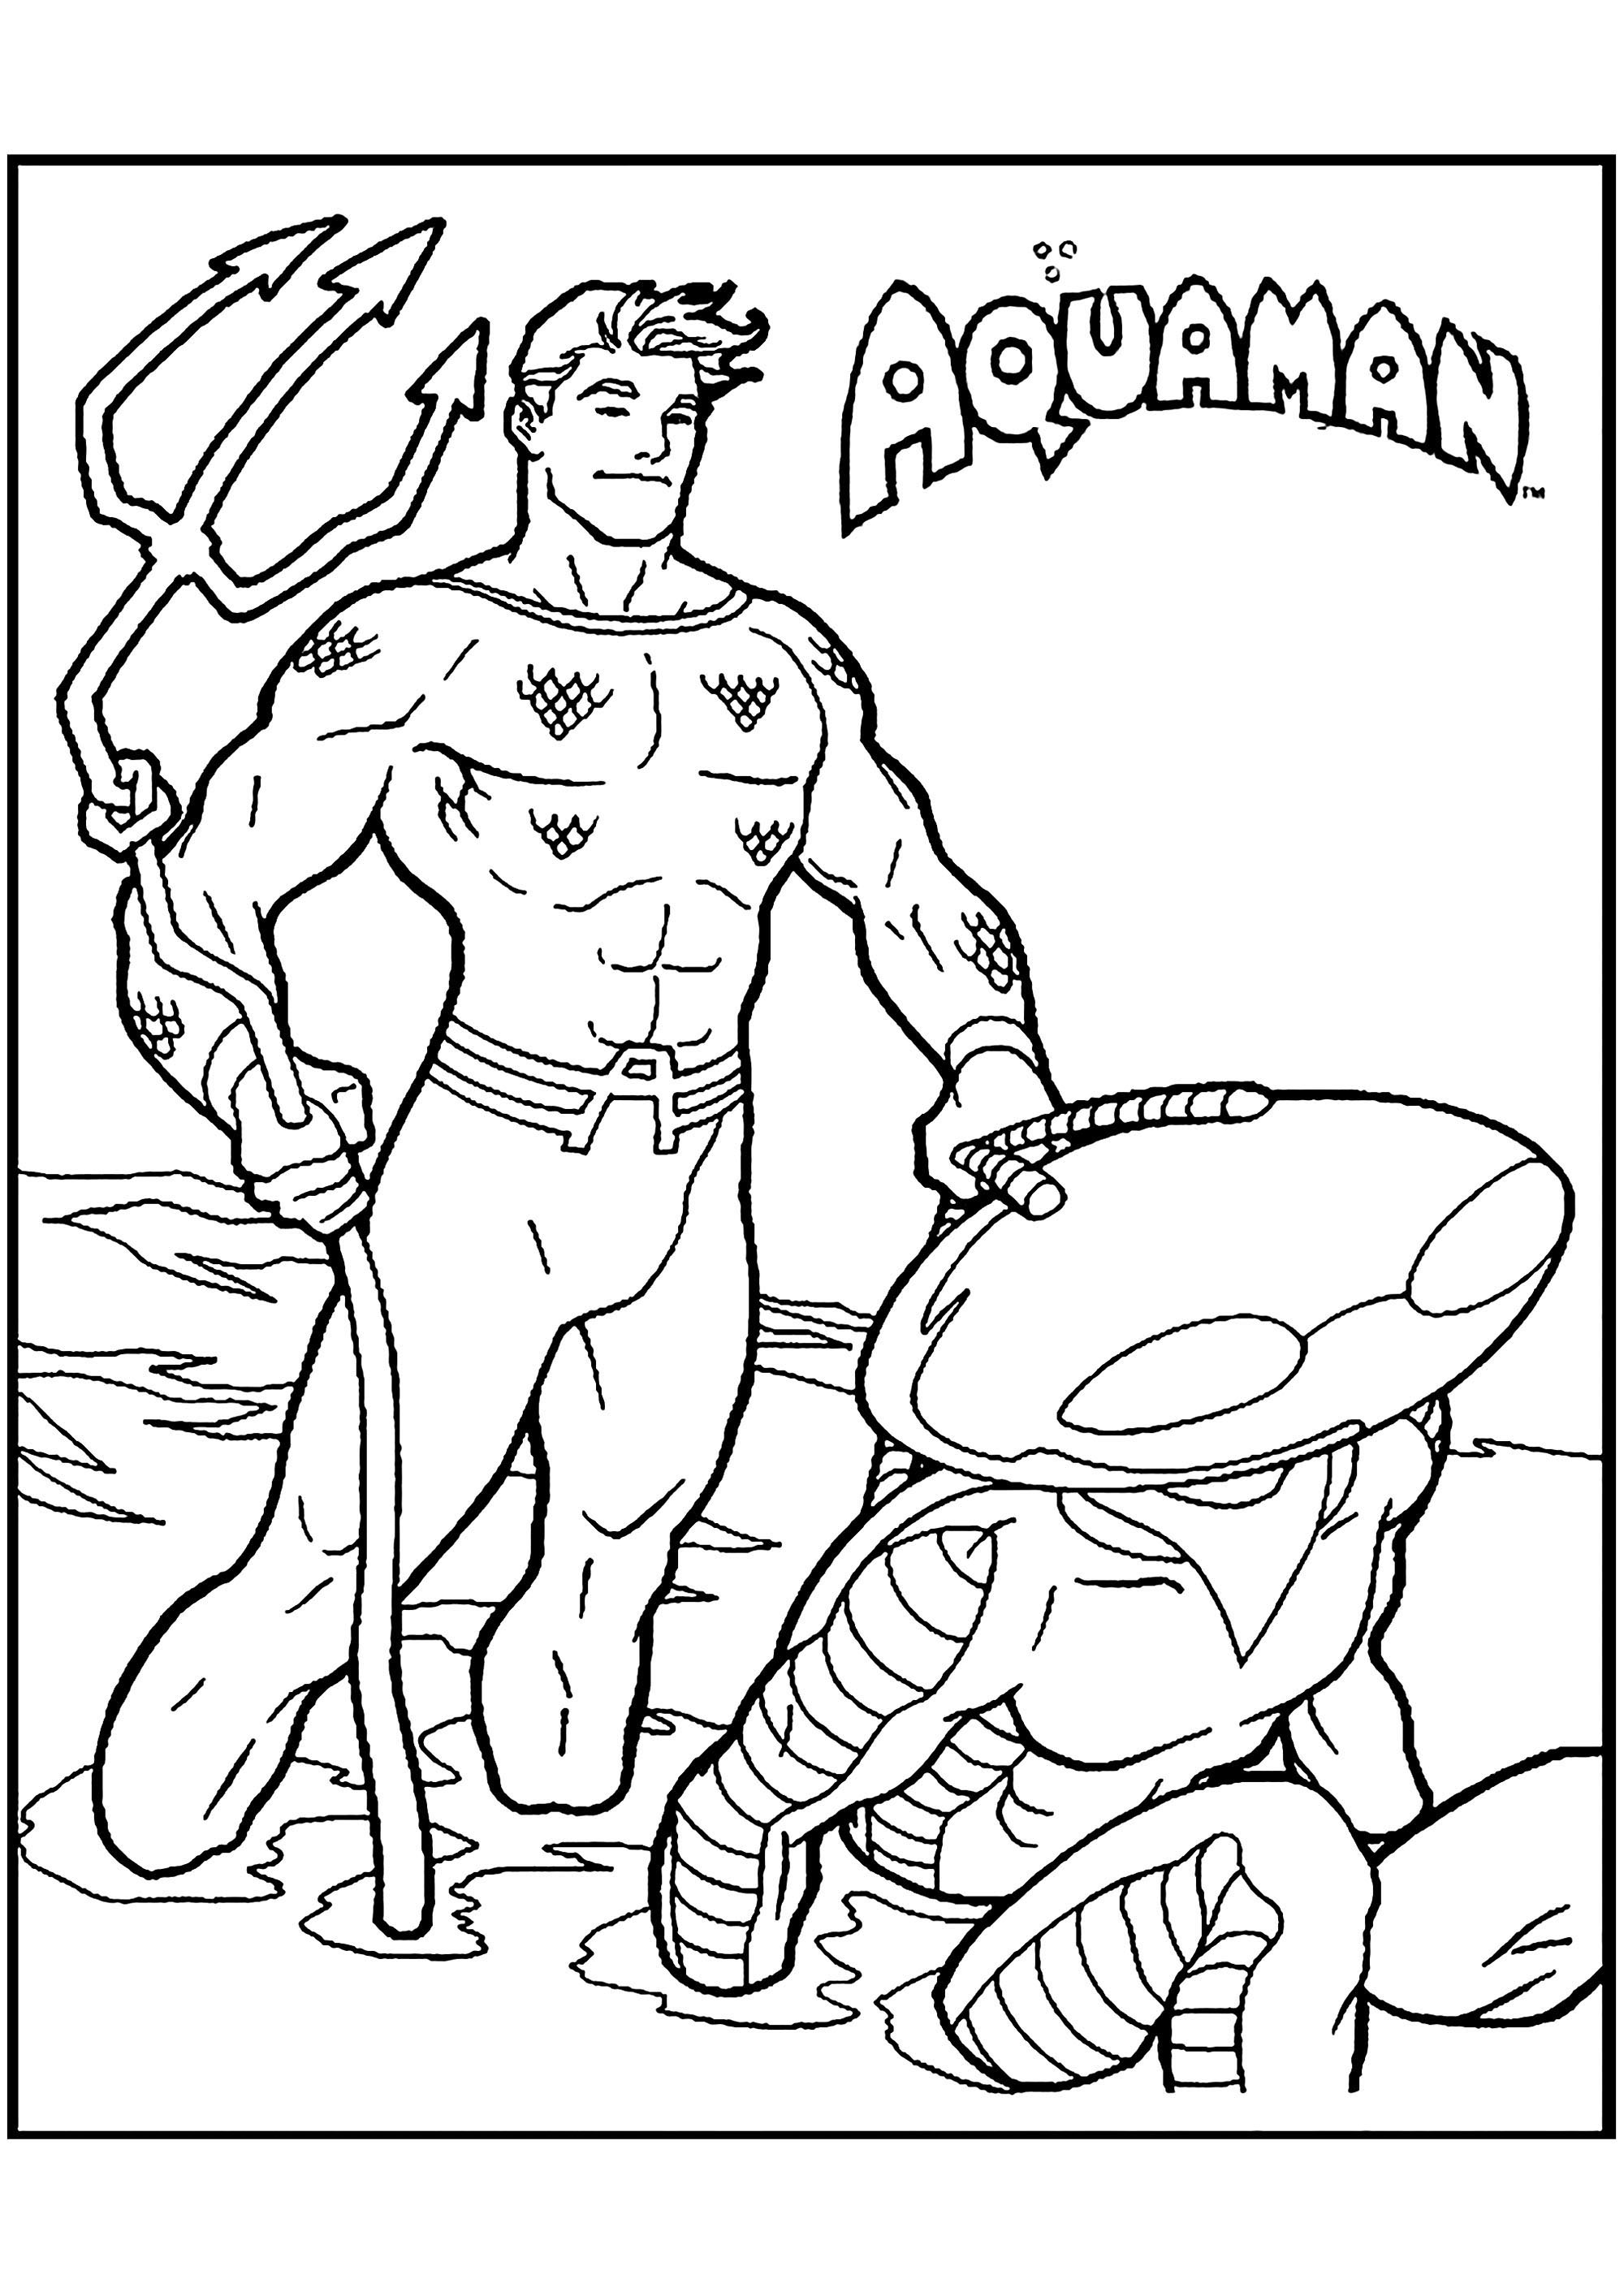 Aquaman Beat The Bad Guy Coloring Page